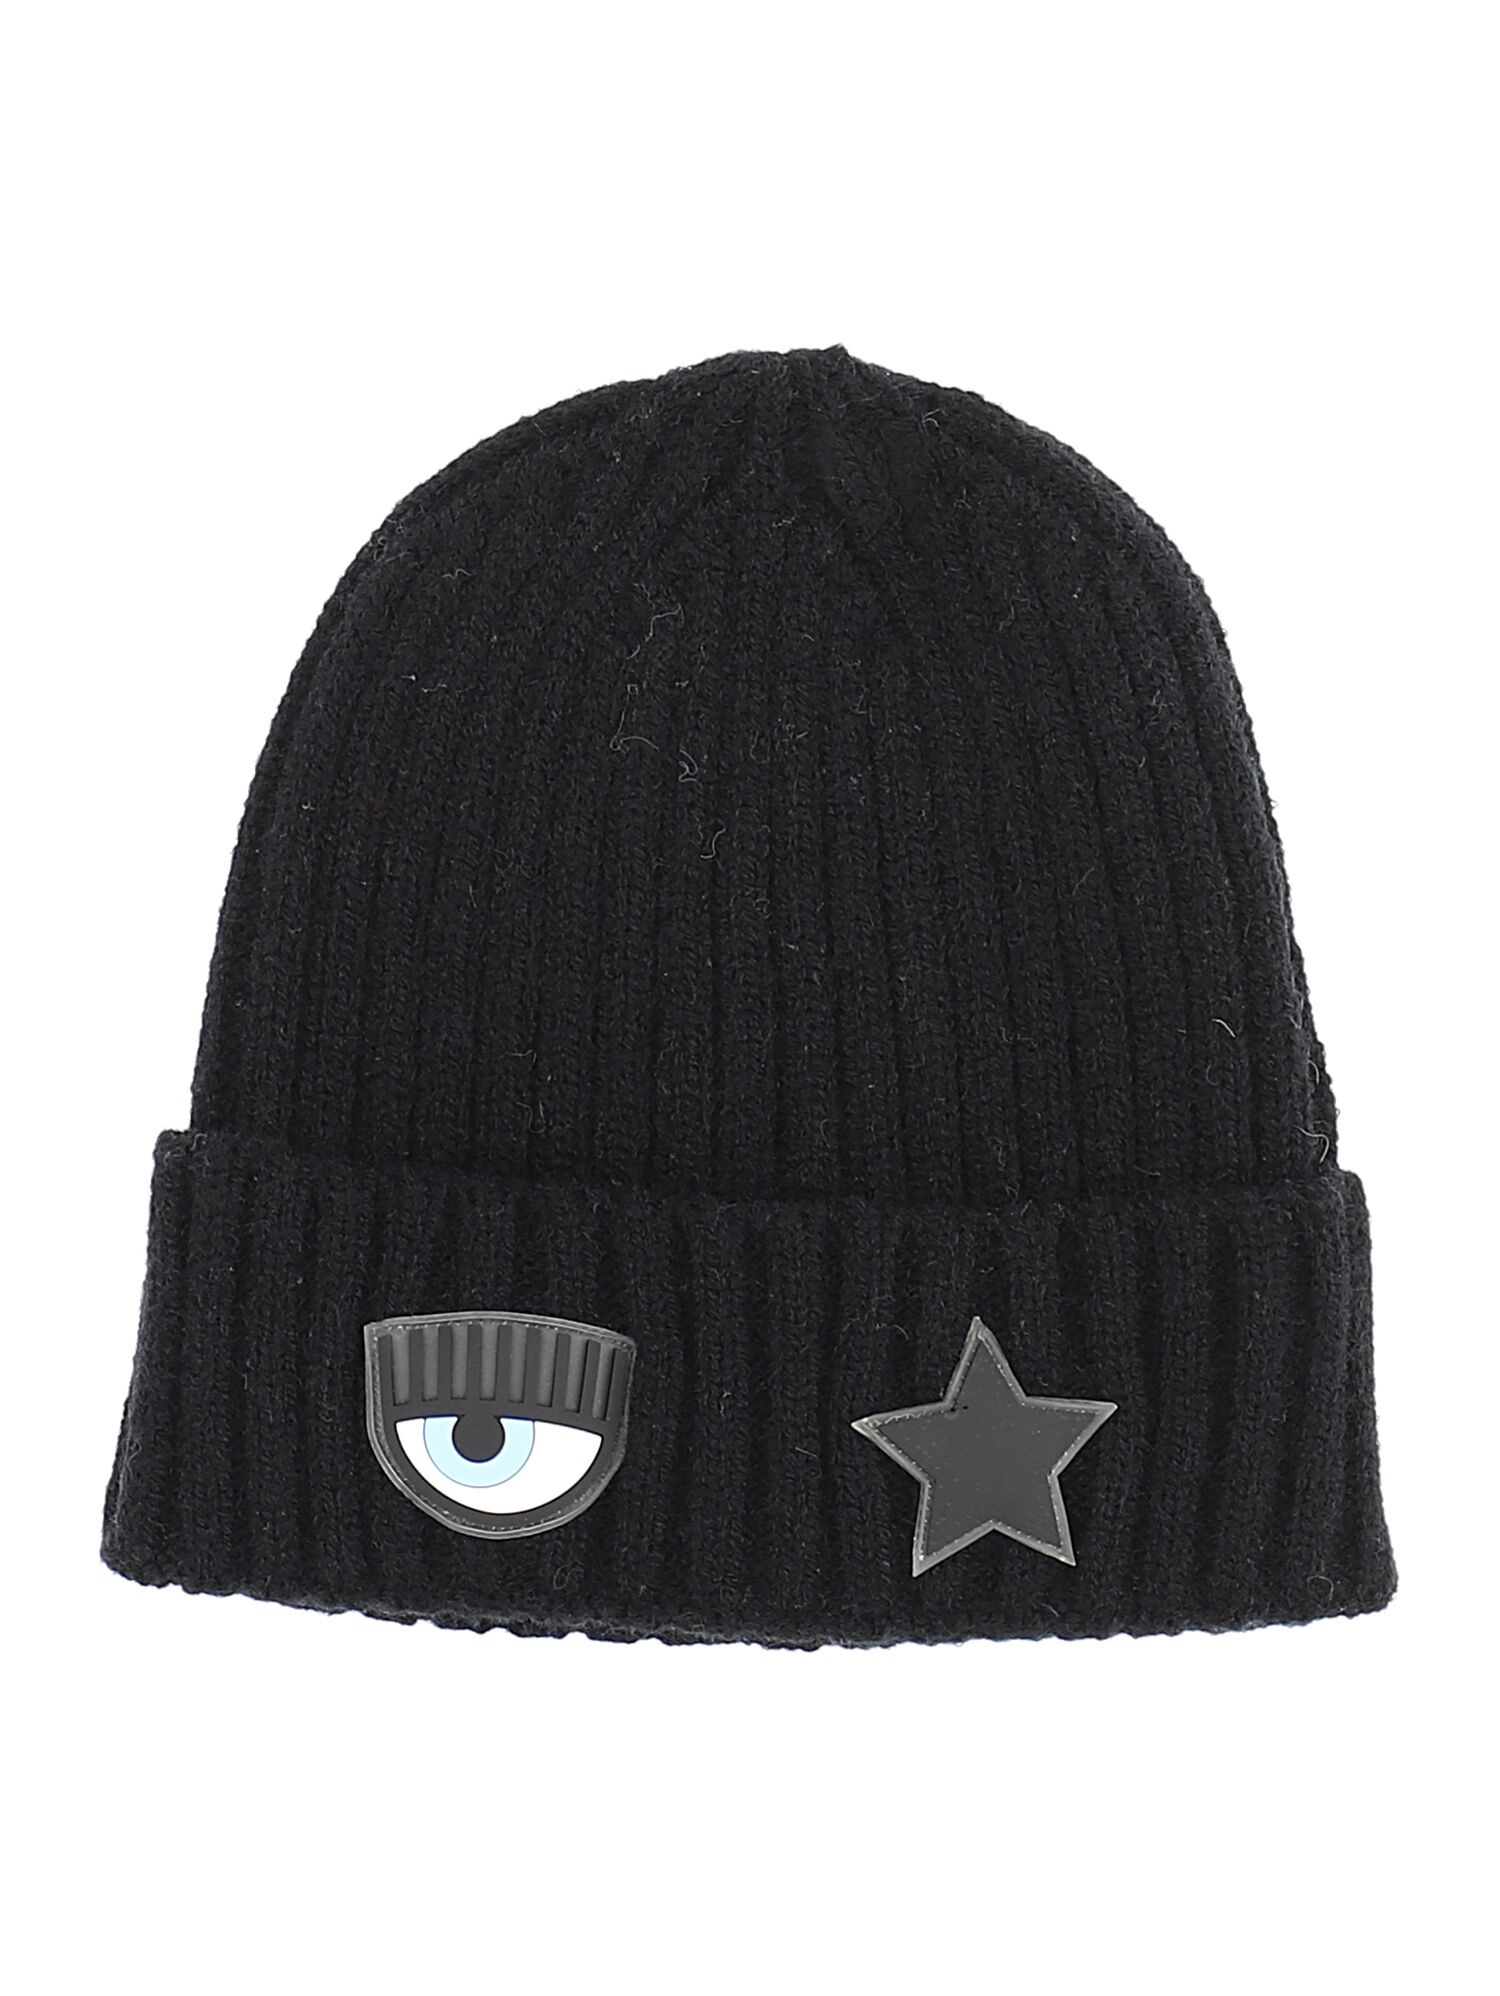 Eyestar wool blend hat Monnalisa Girls Accessories Headwear Beanies 